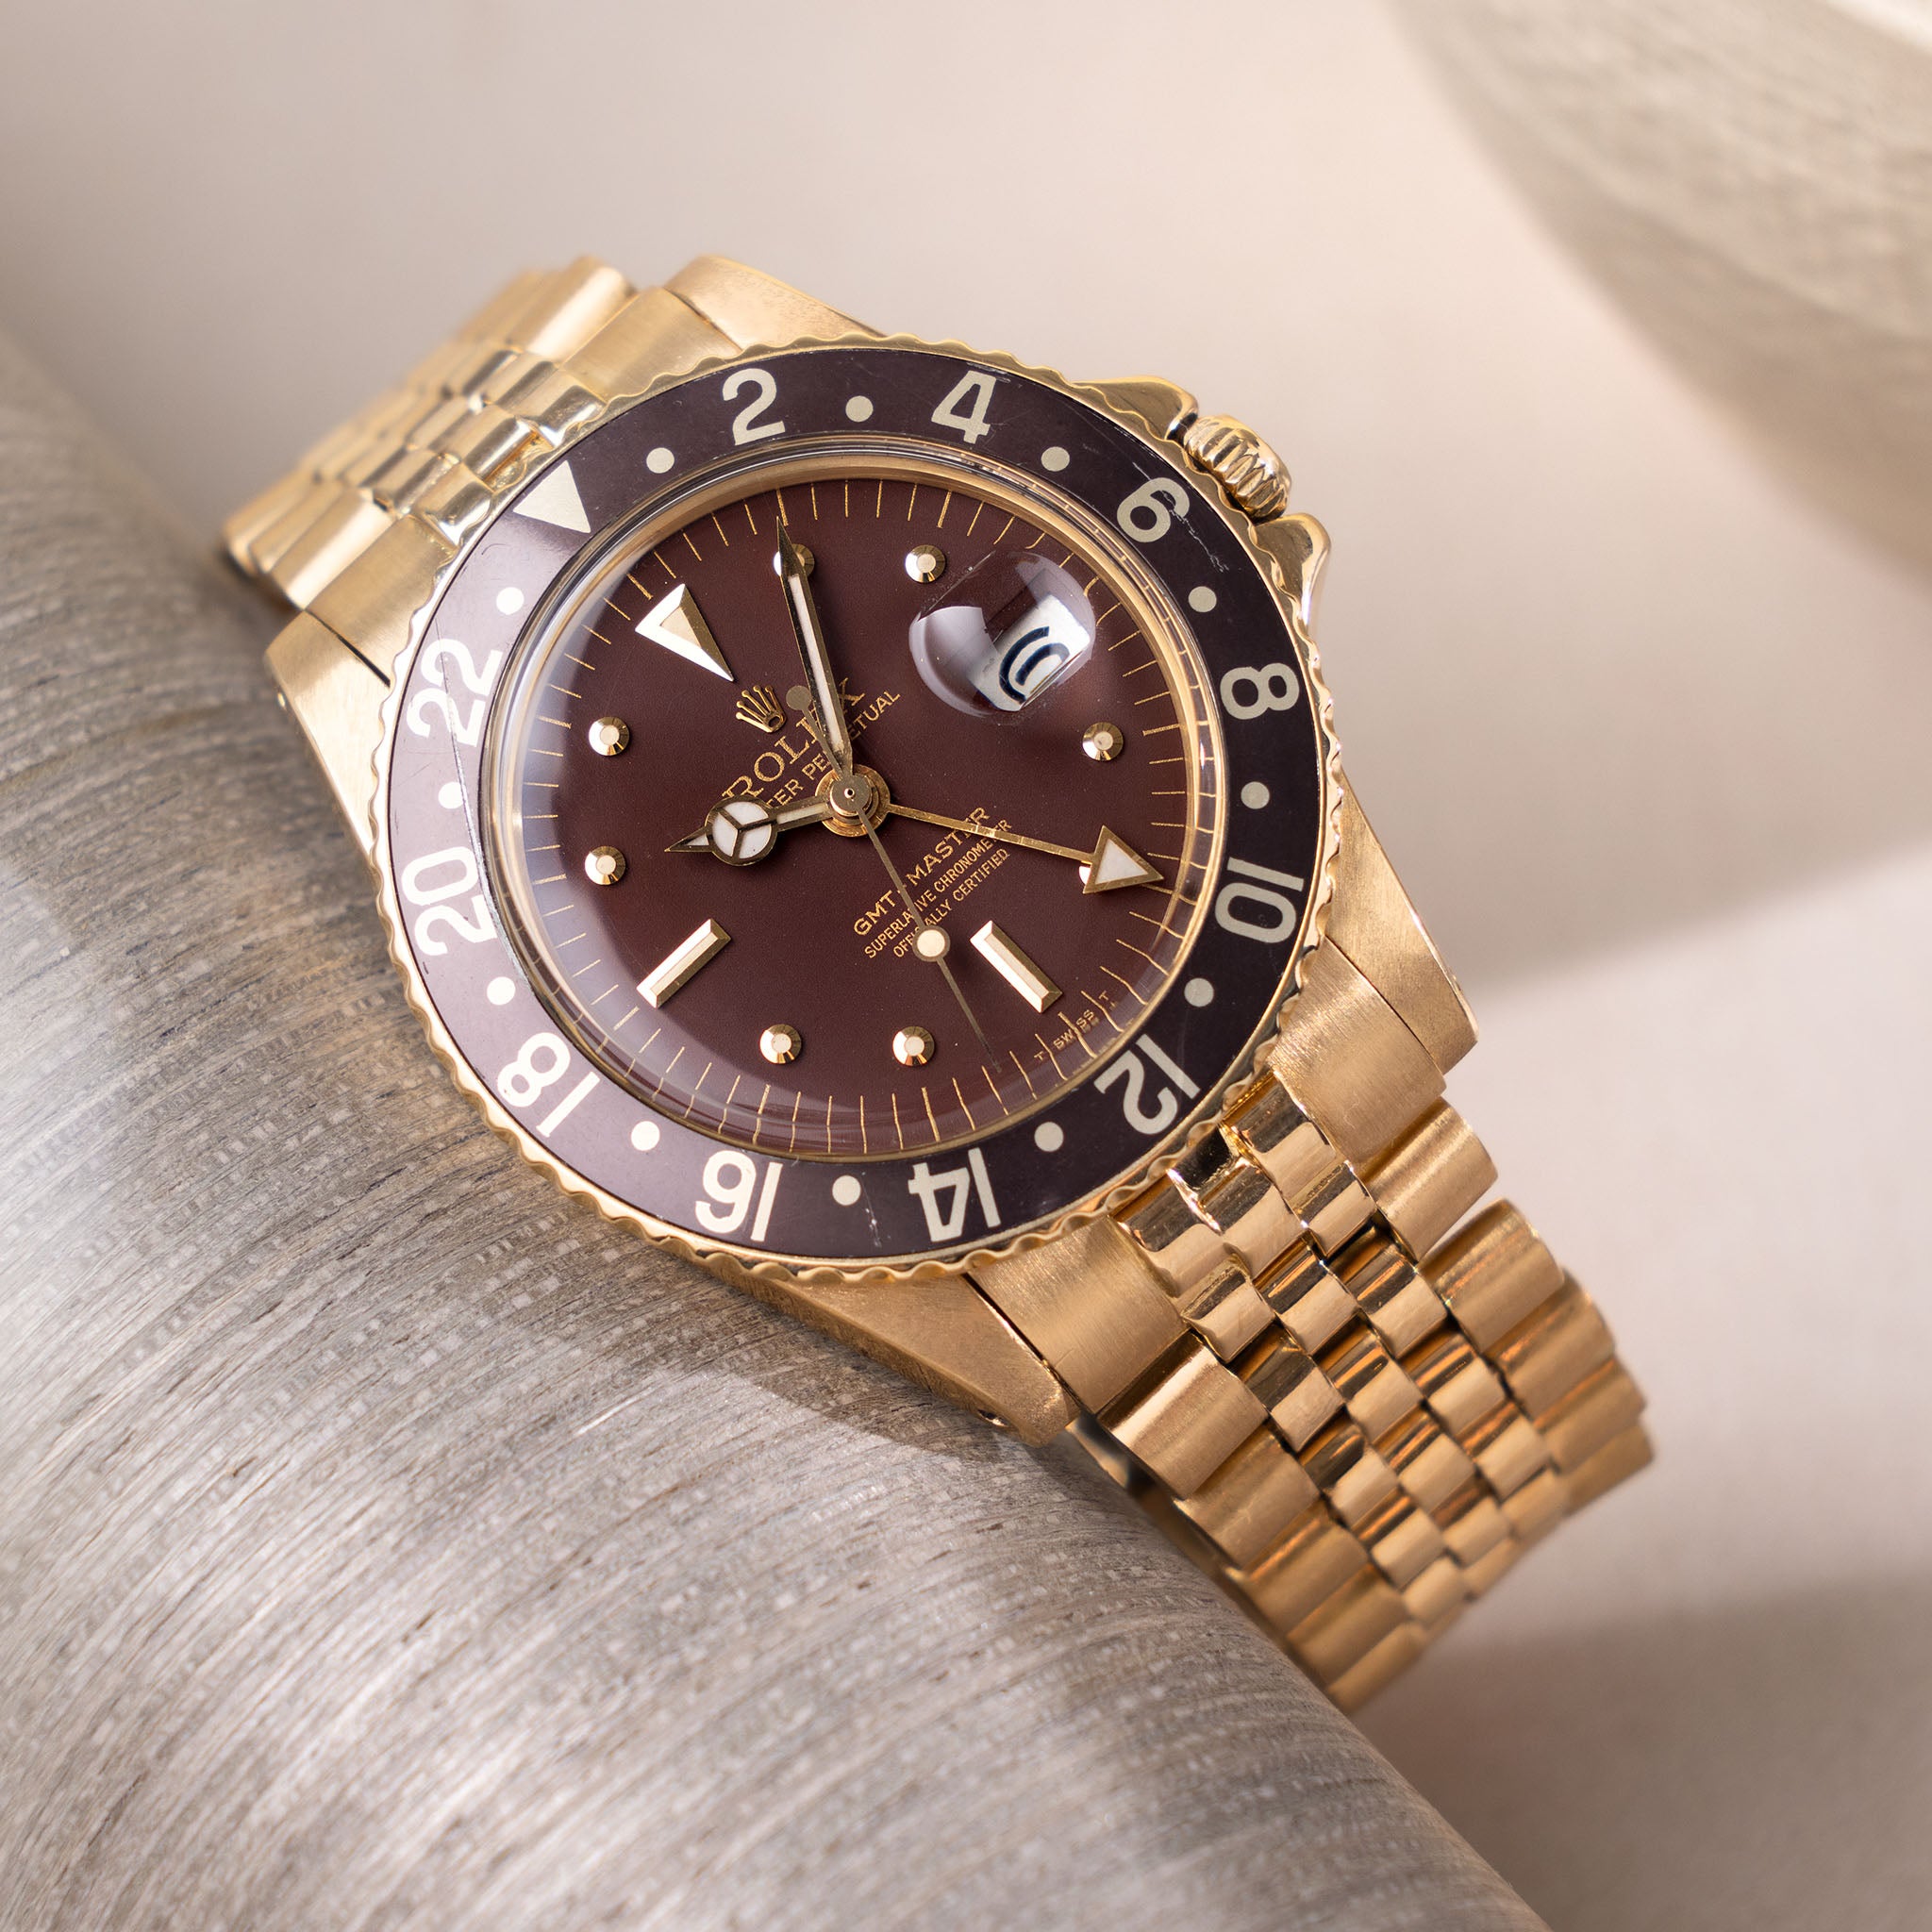 Rolex GMT-Master Brown ‘No I’ Dial and D’Agosto Bracelet Ref 1675/8